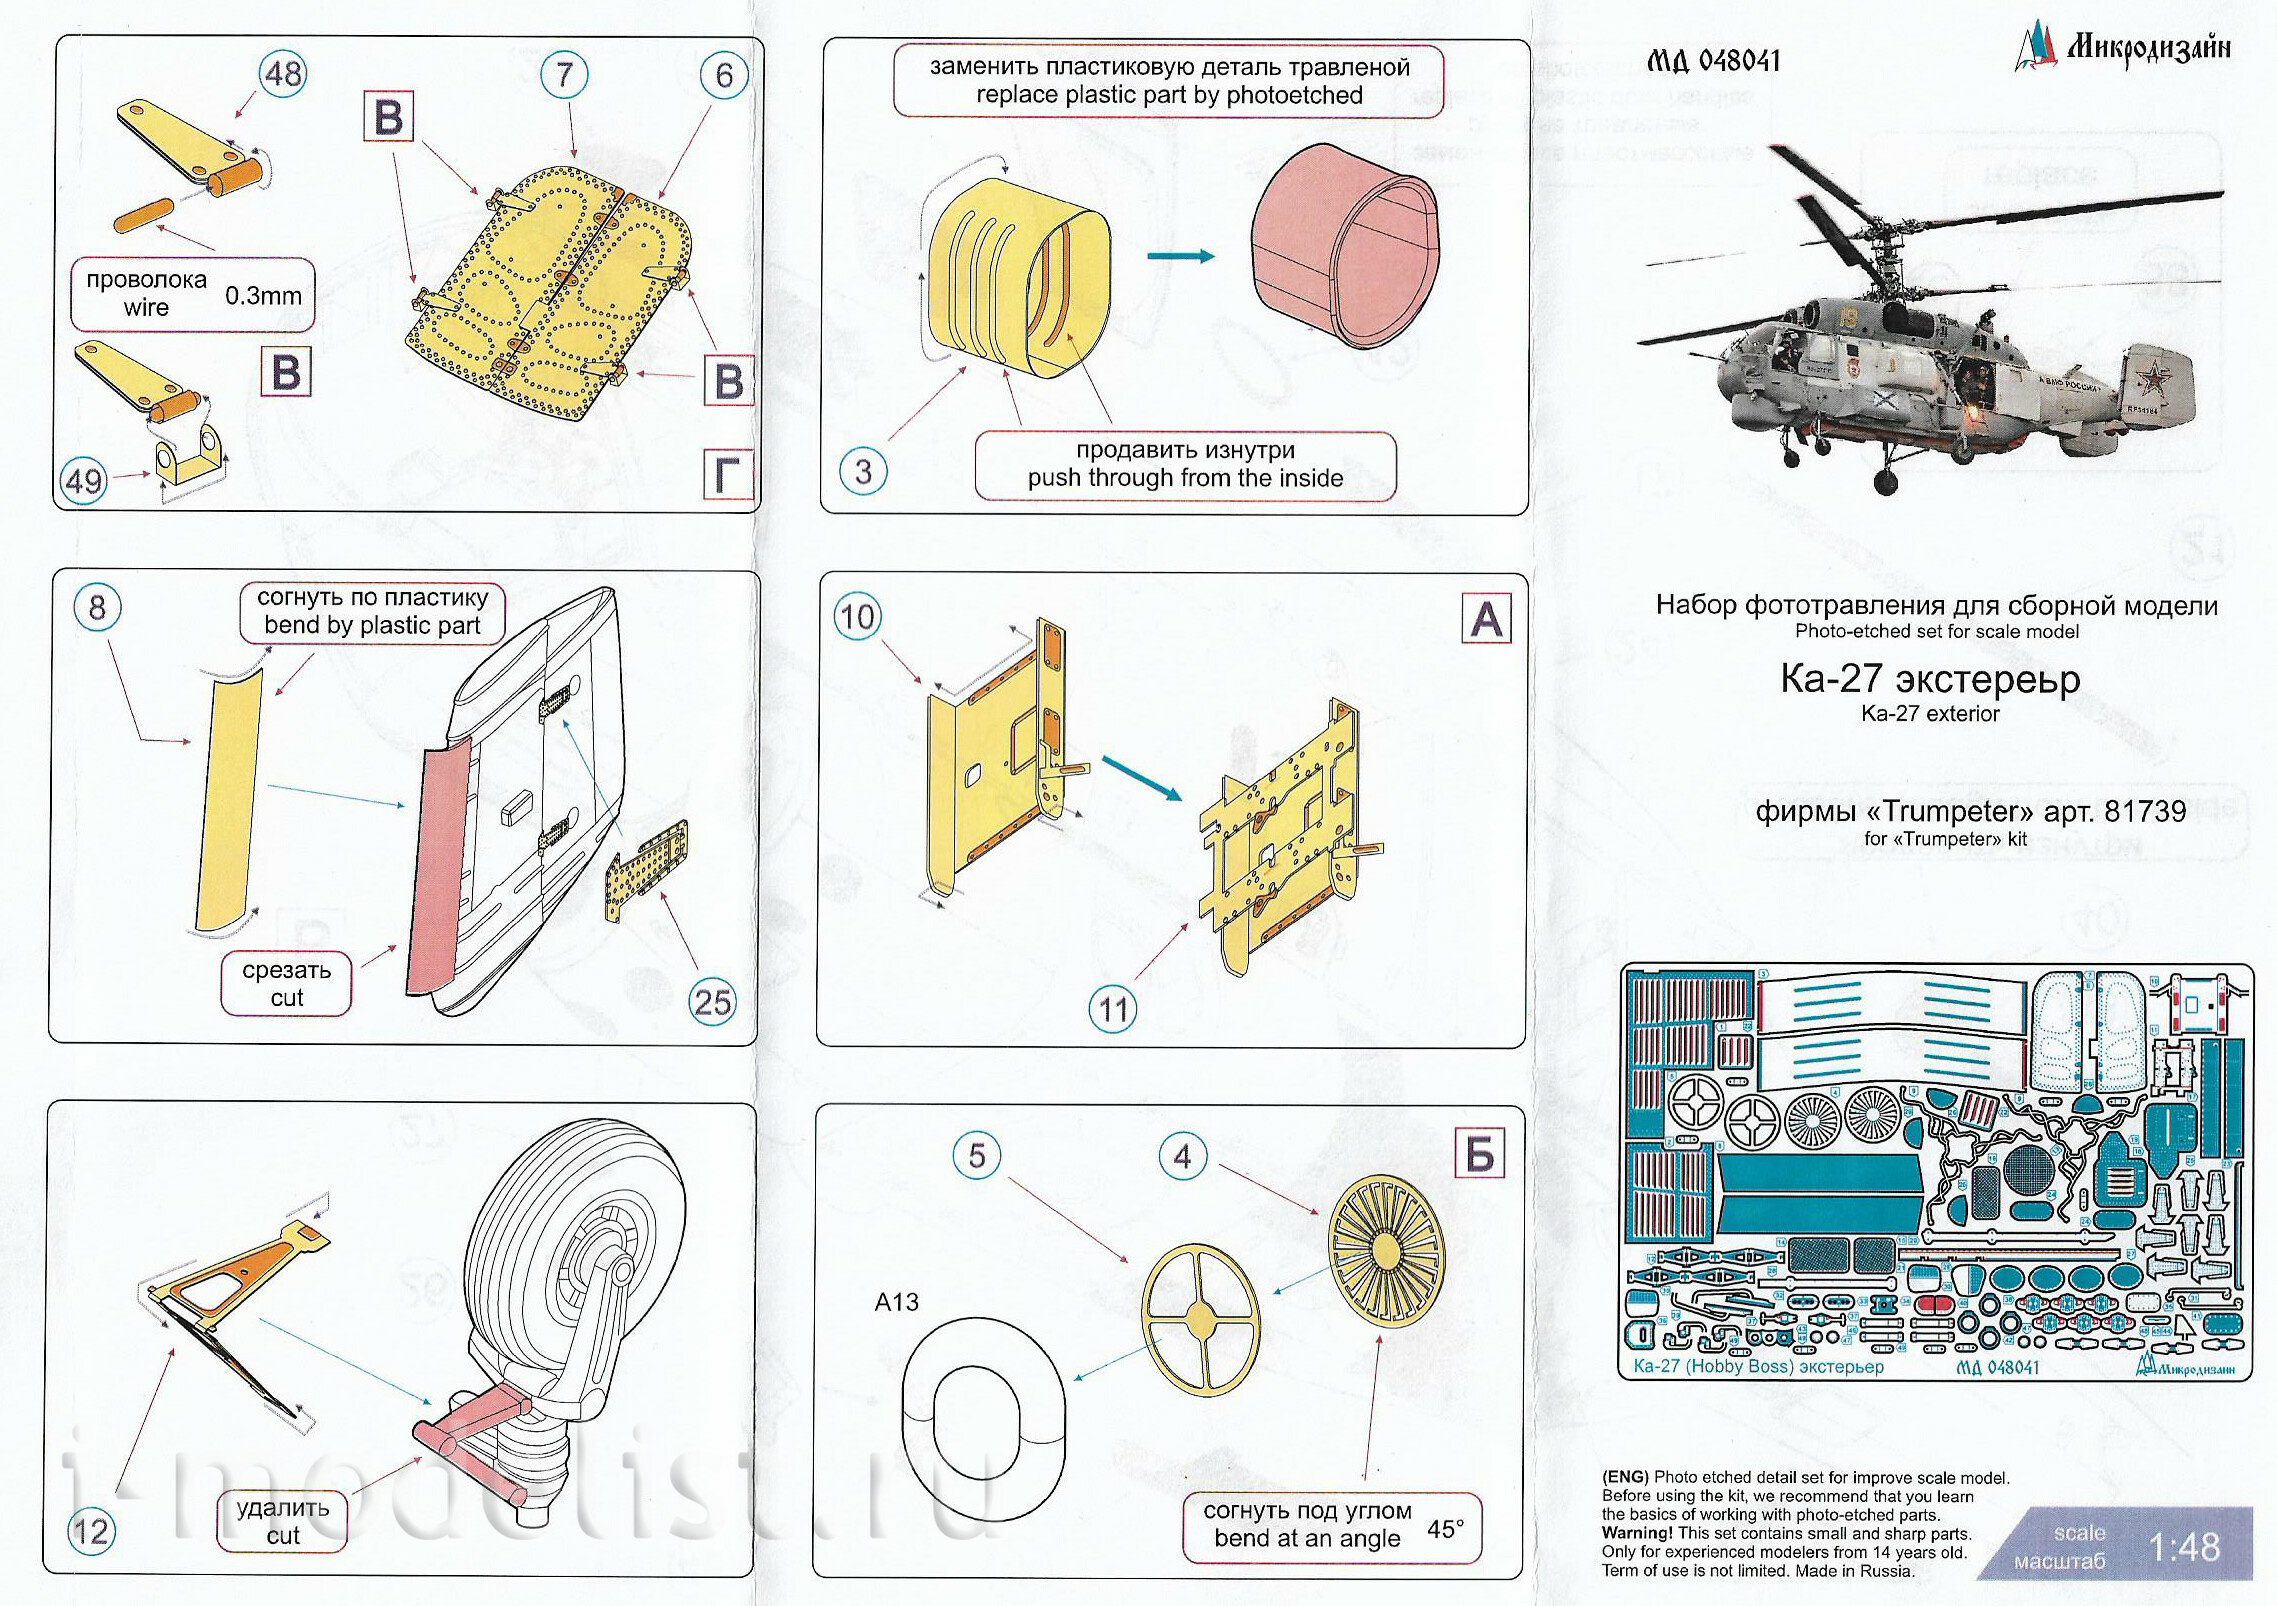 048041 Microdesign 1/48 Photo Etching kit for Ka-27 (exterior)